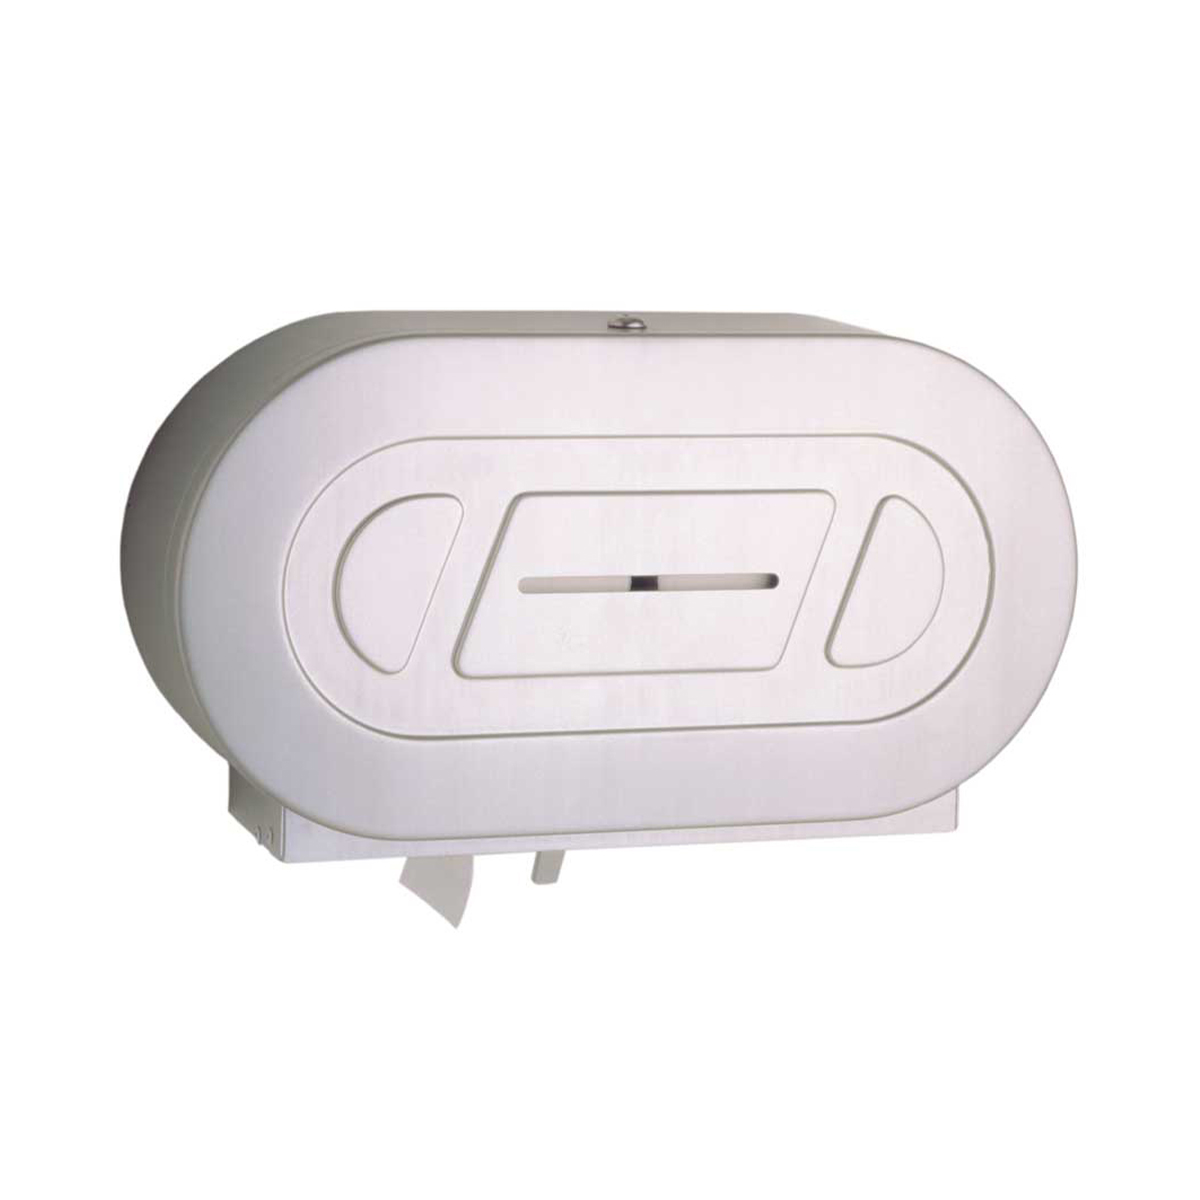 Bobrick B-2892 Surface-Mounted Twin Jumbo-Roll Toilet Tissue Dispenser